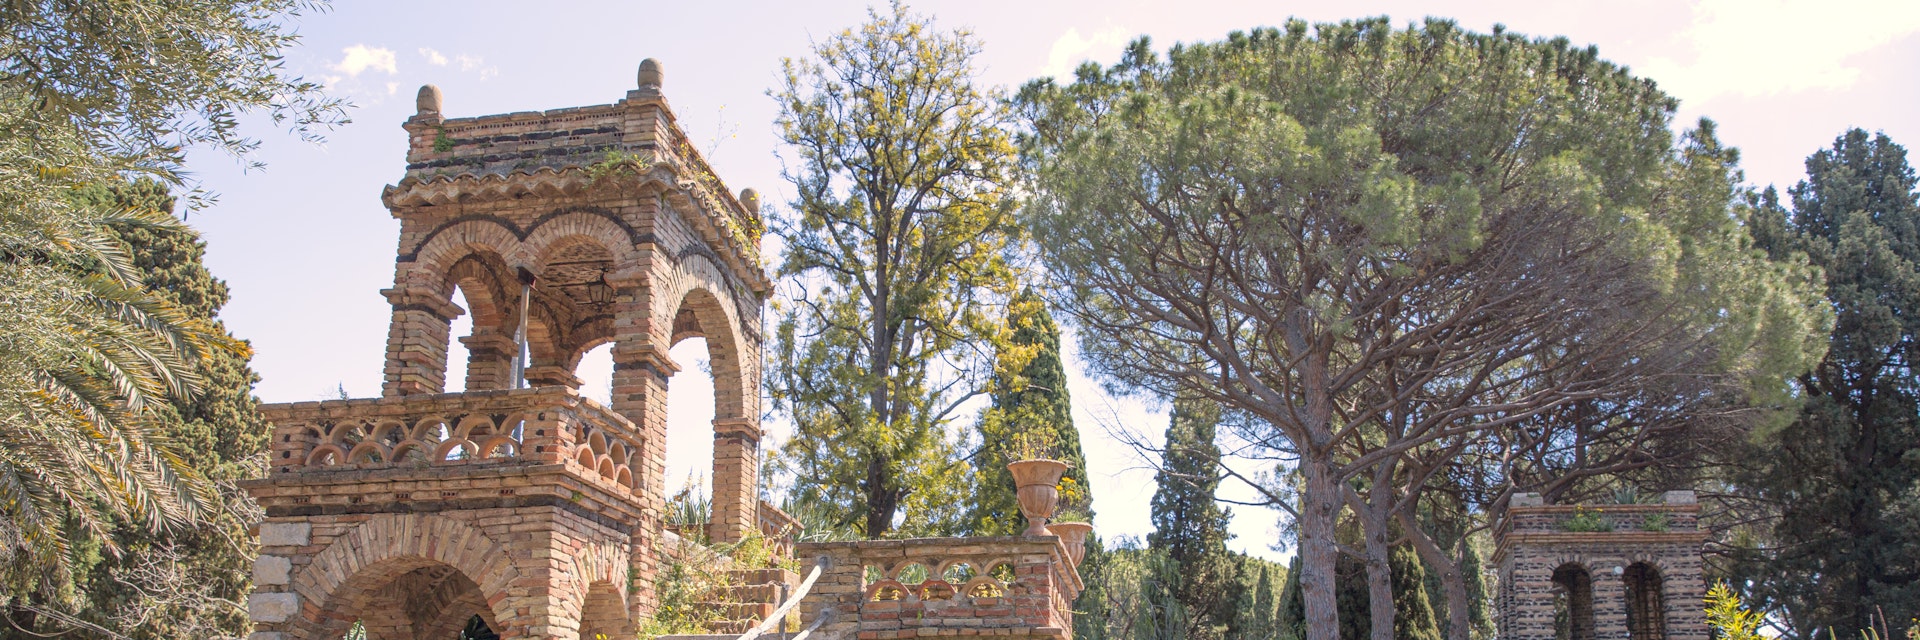 Vila Comunale park in Taormina, Sicily island, Italy. Old ruins in the park.
1392580056
villa comunale